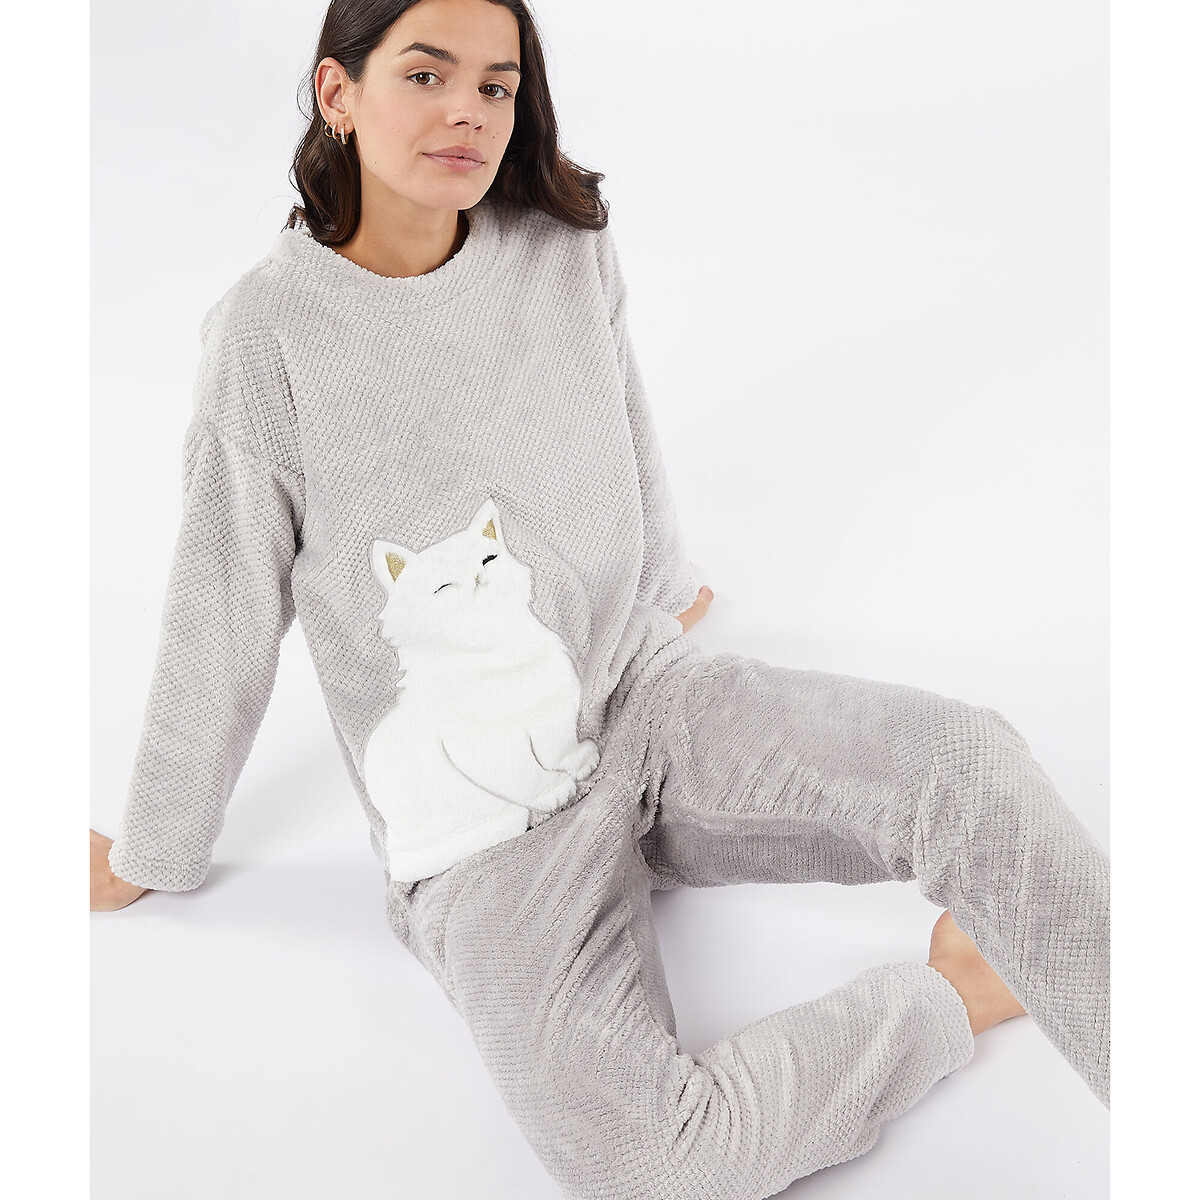 Micat pyjama bottoms, grey, Etam | La Redoute